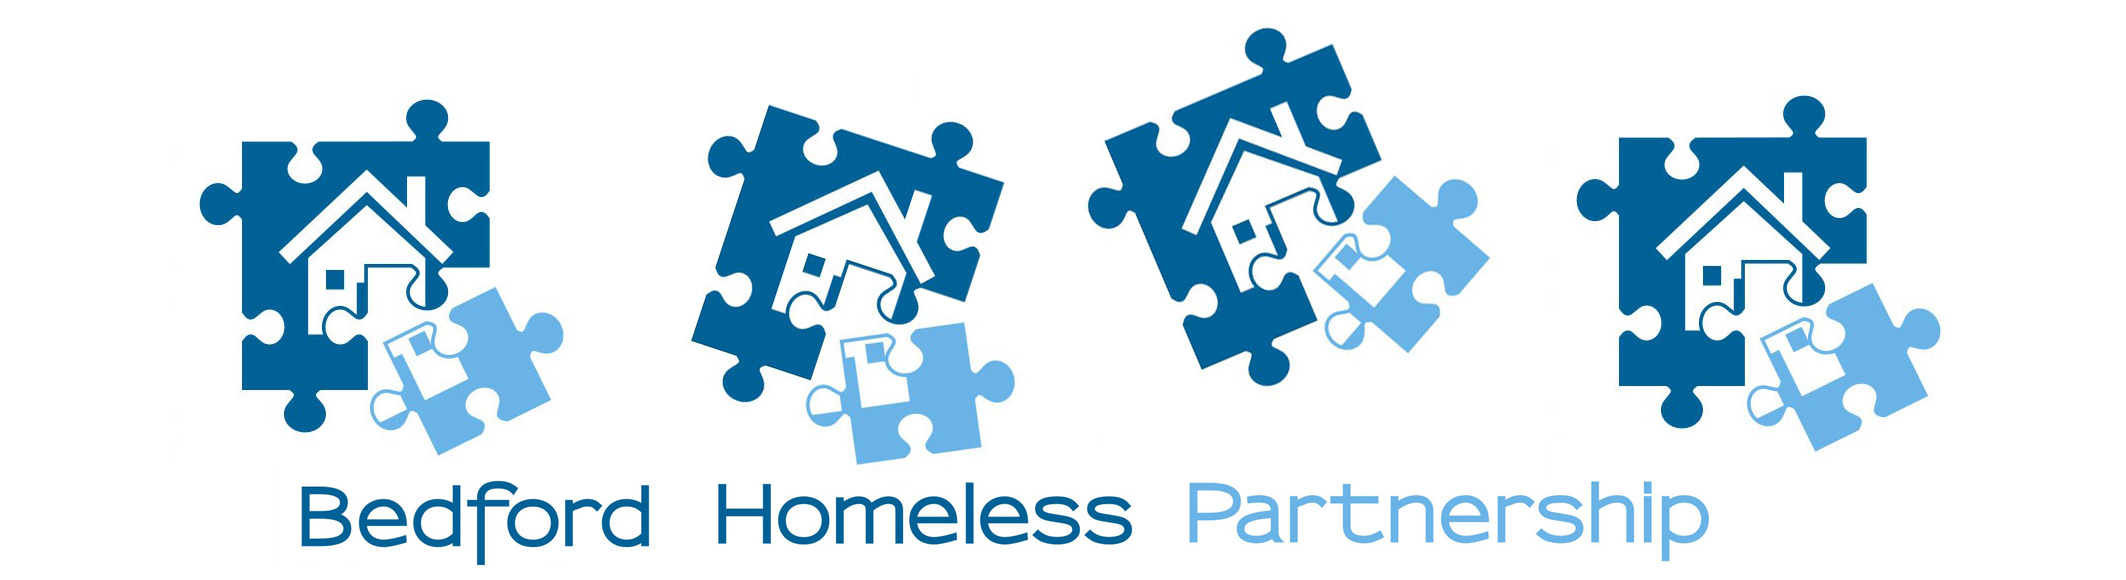 Bedford Homeless Partnership Image